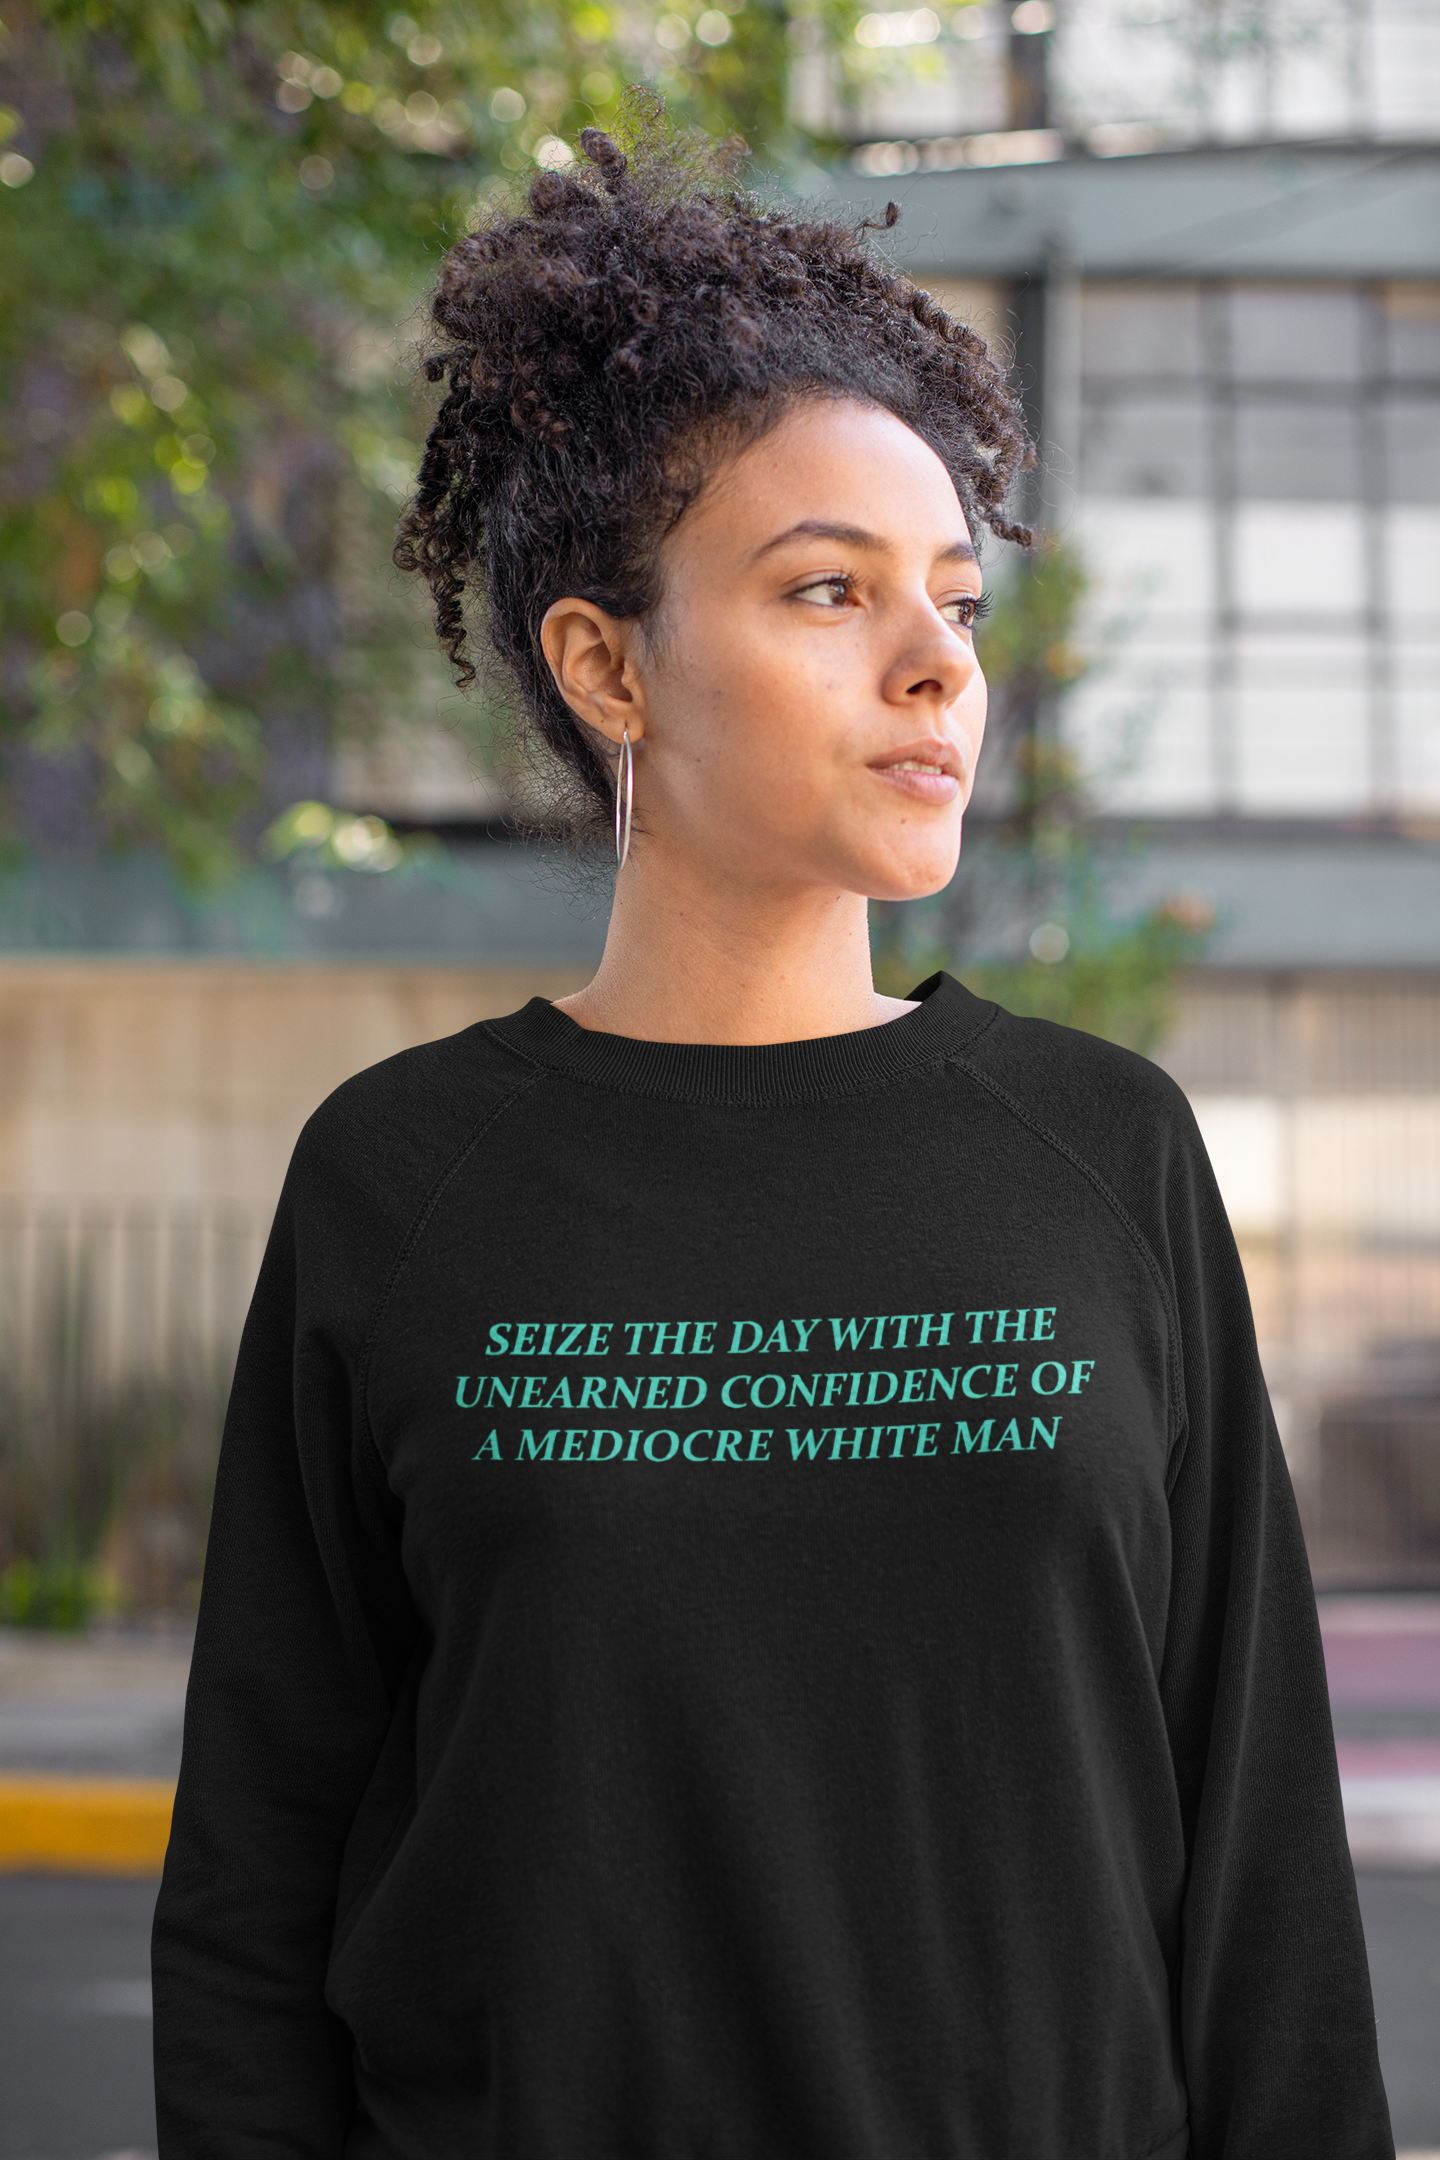 Seize the day Unisex Feminist Sweatshirt - Shop Women’s Rights T-shirts - Black Oversized Women’s Sweatshirt